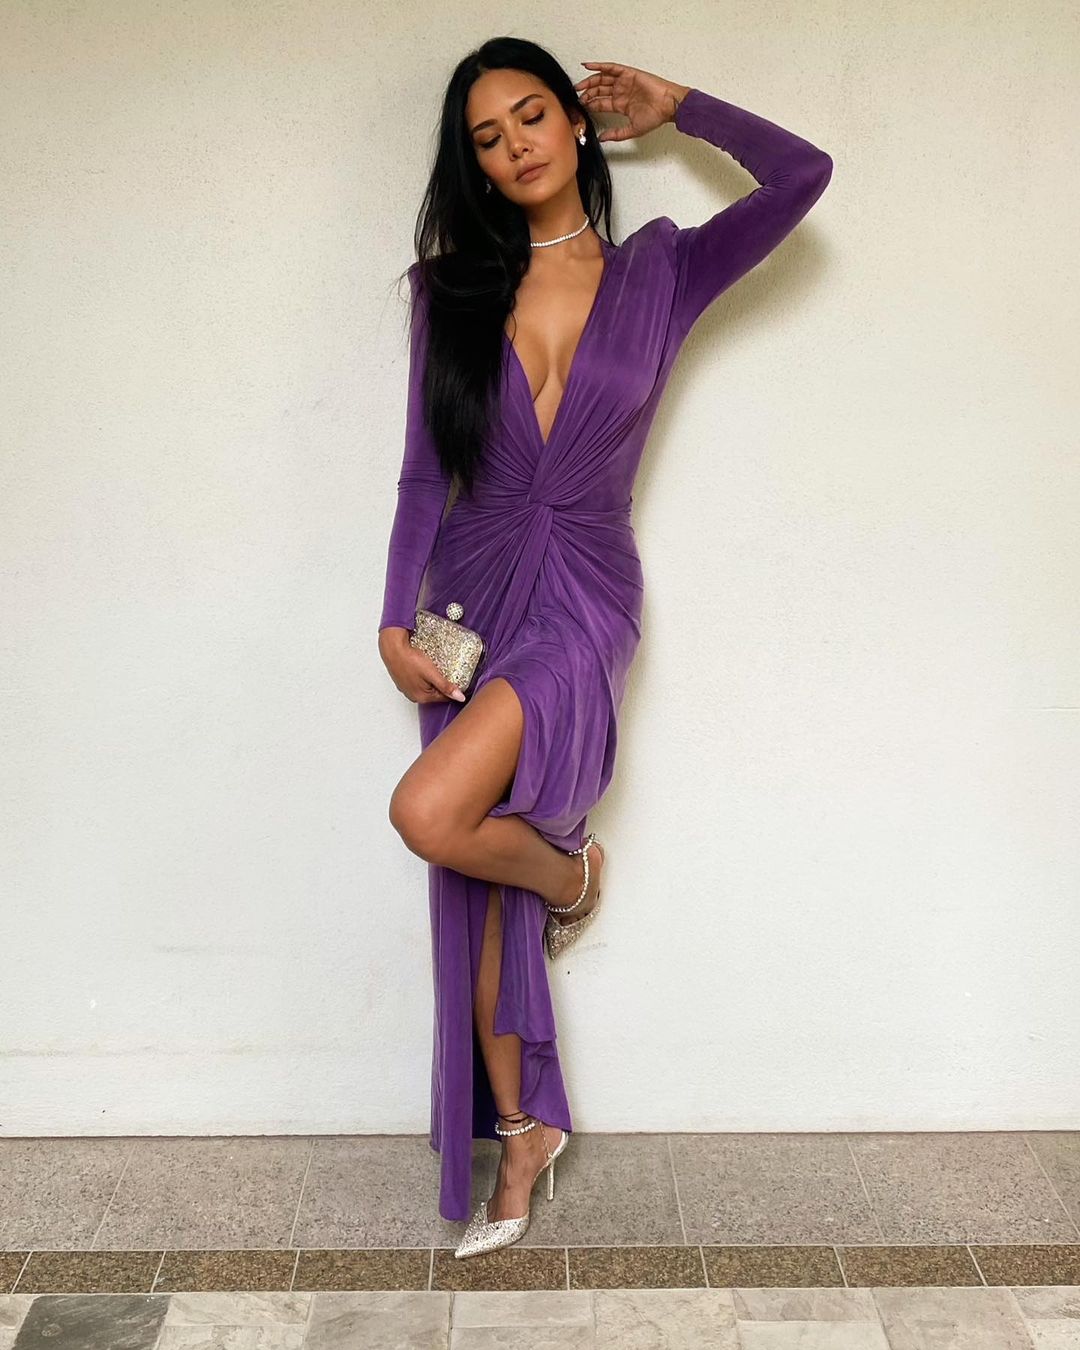 Esha Gupta flaunts her curves in the purple pleated dress